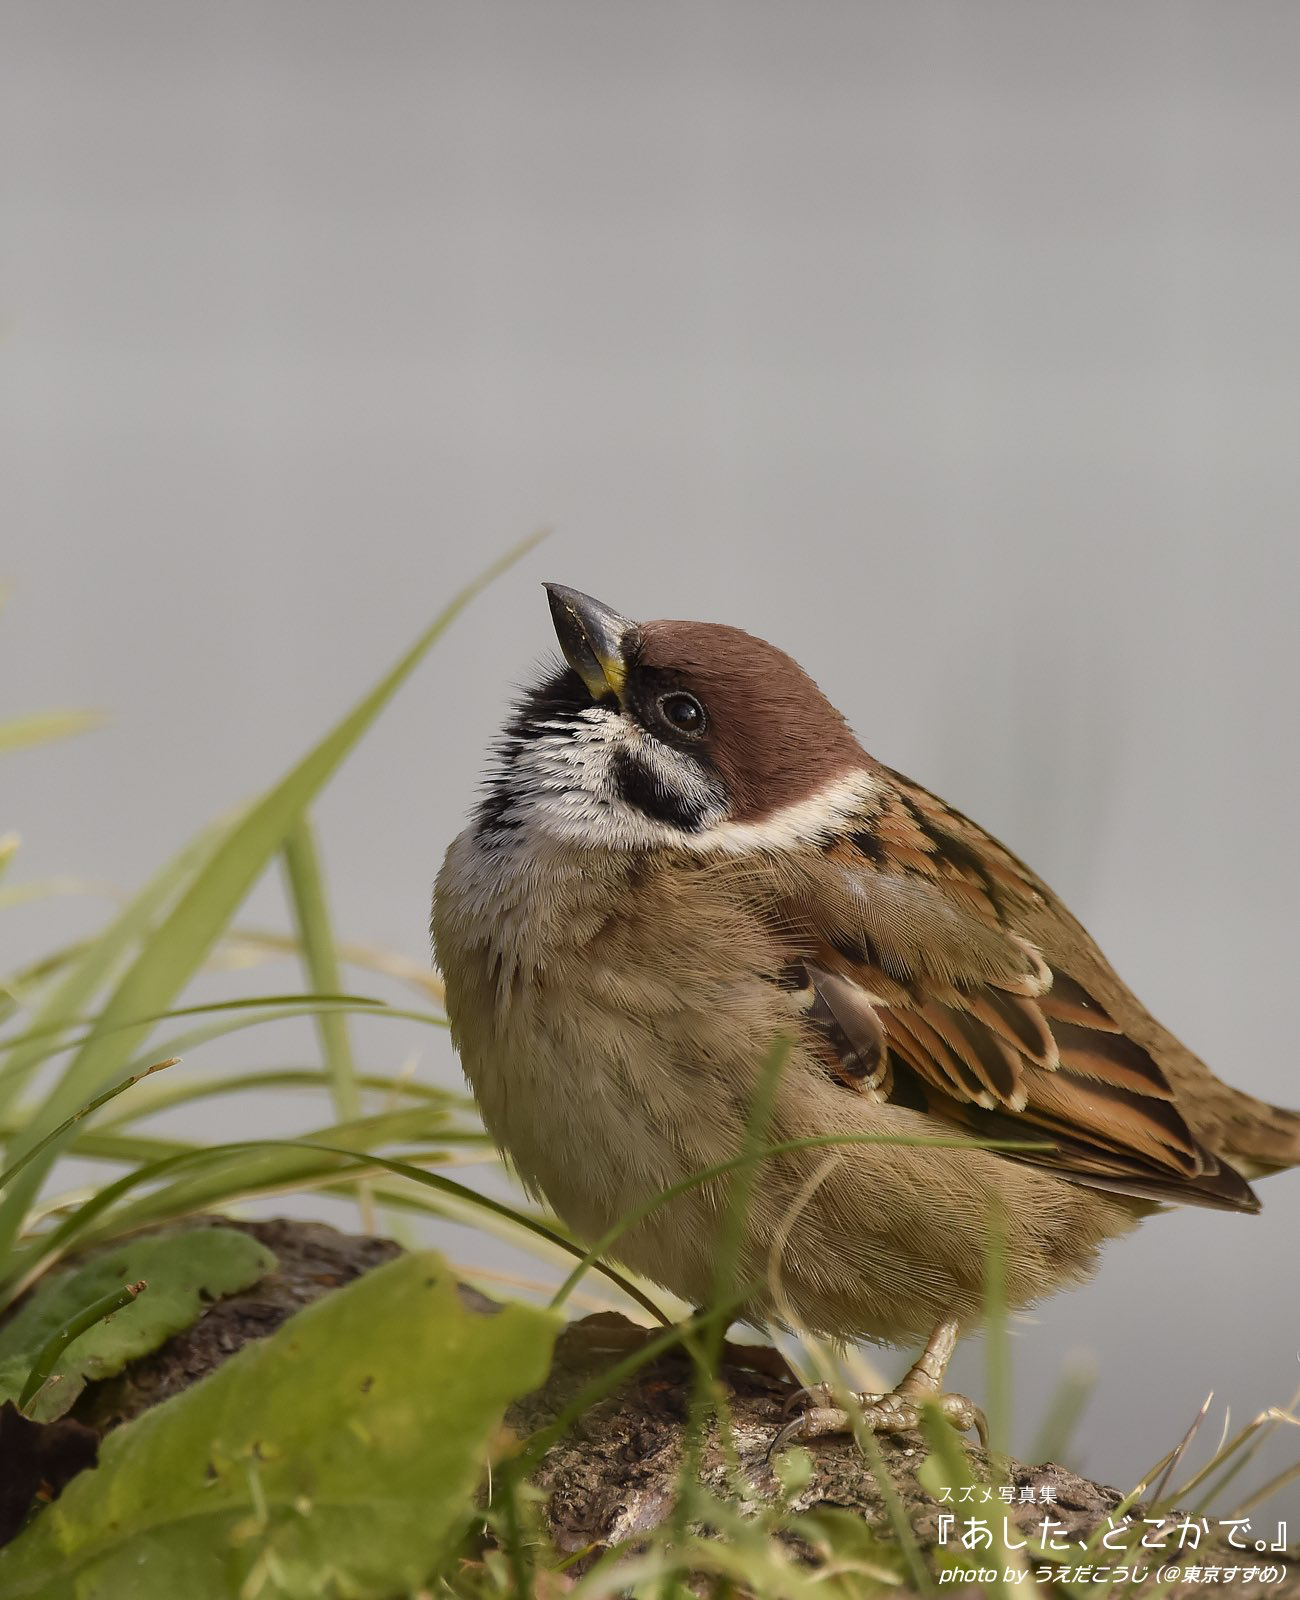 Cute Baby Sparrow | Spatz | Pinterest | Bird, Animal and Colorful birds